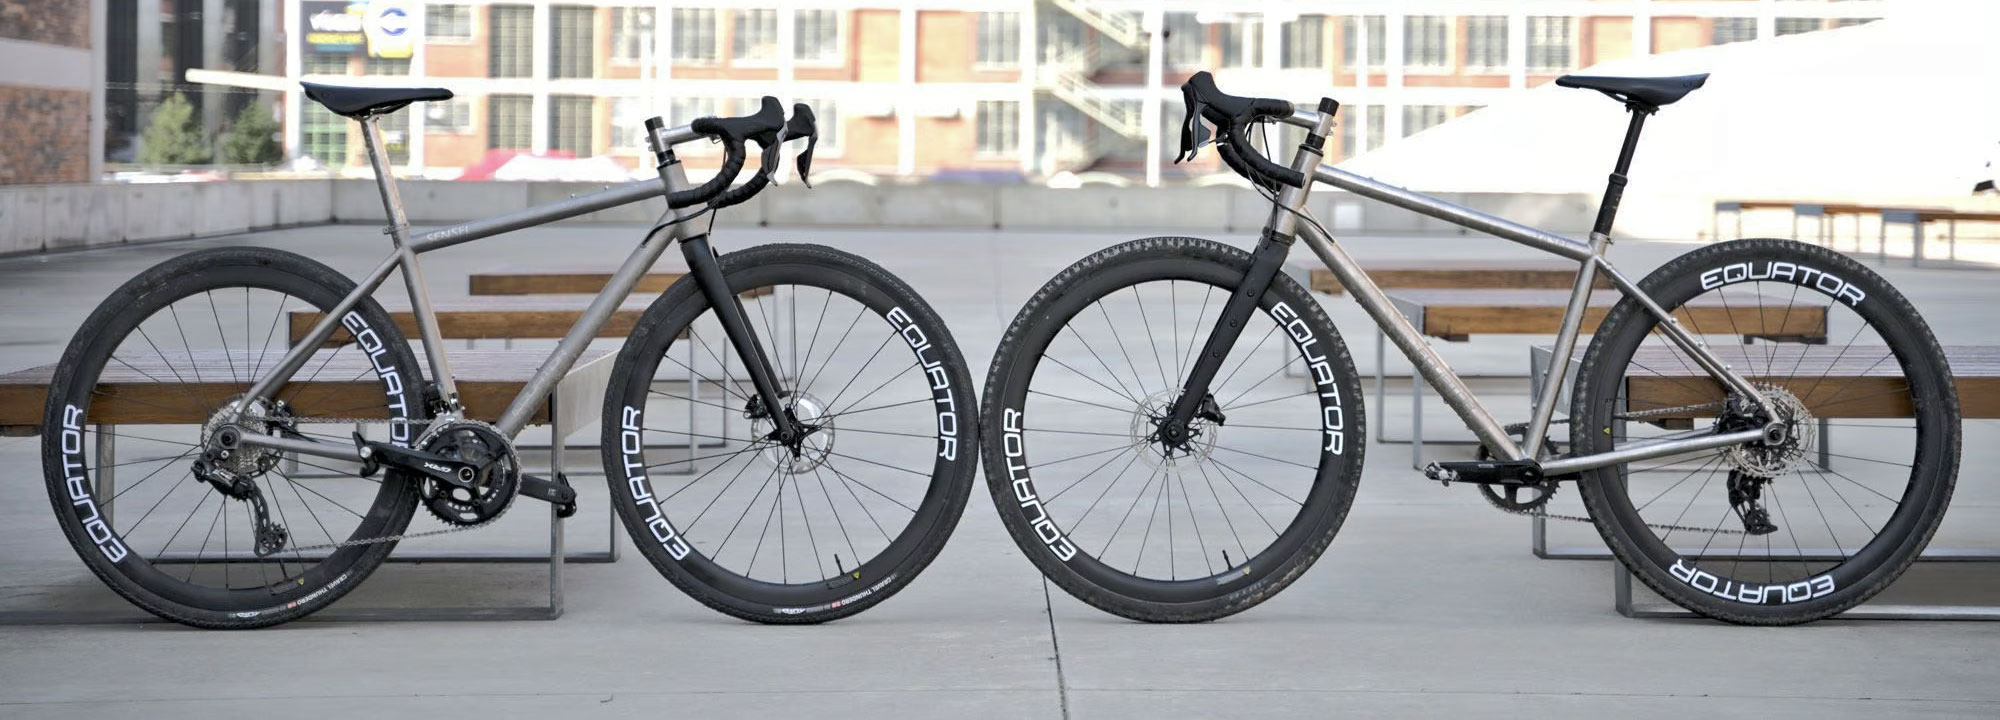 Equator's new affordable consumer-direct titanium gravel bikes, Sensei vs. Yasei